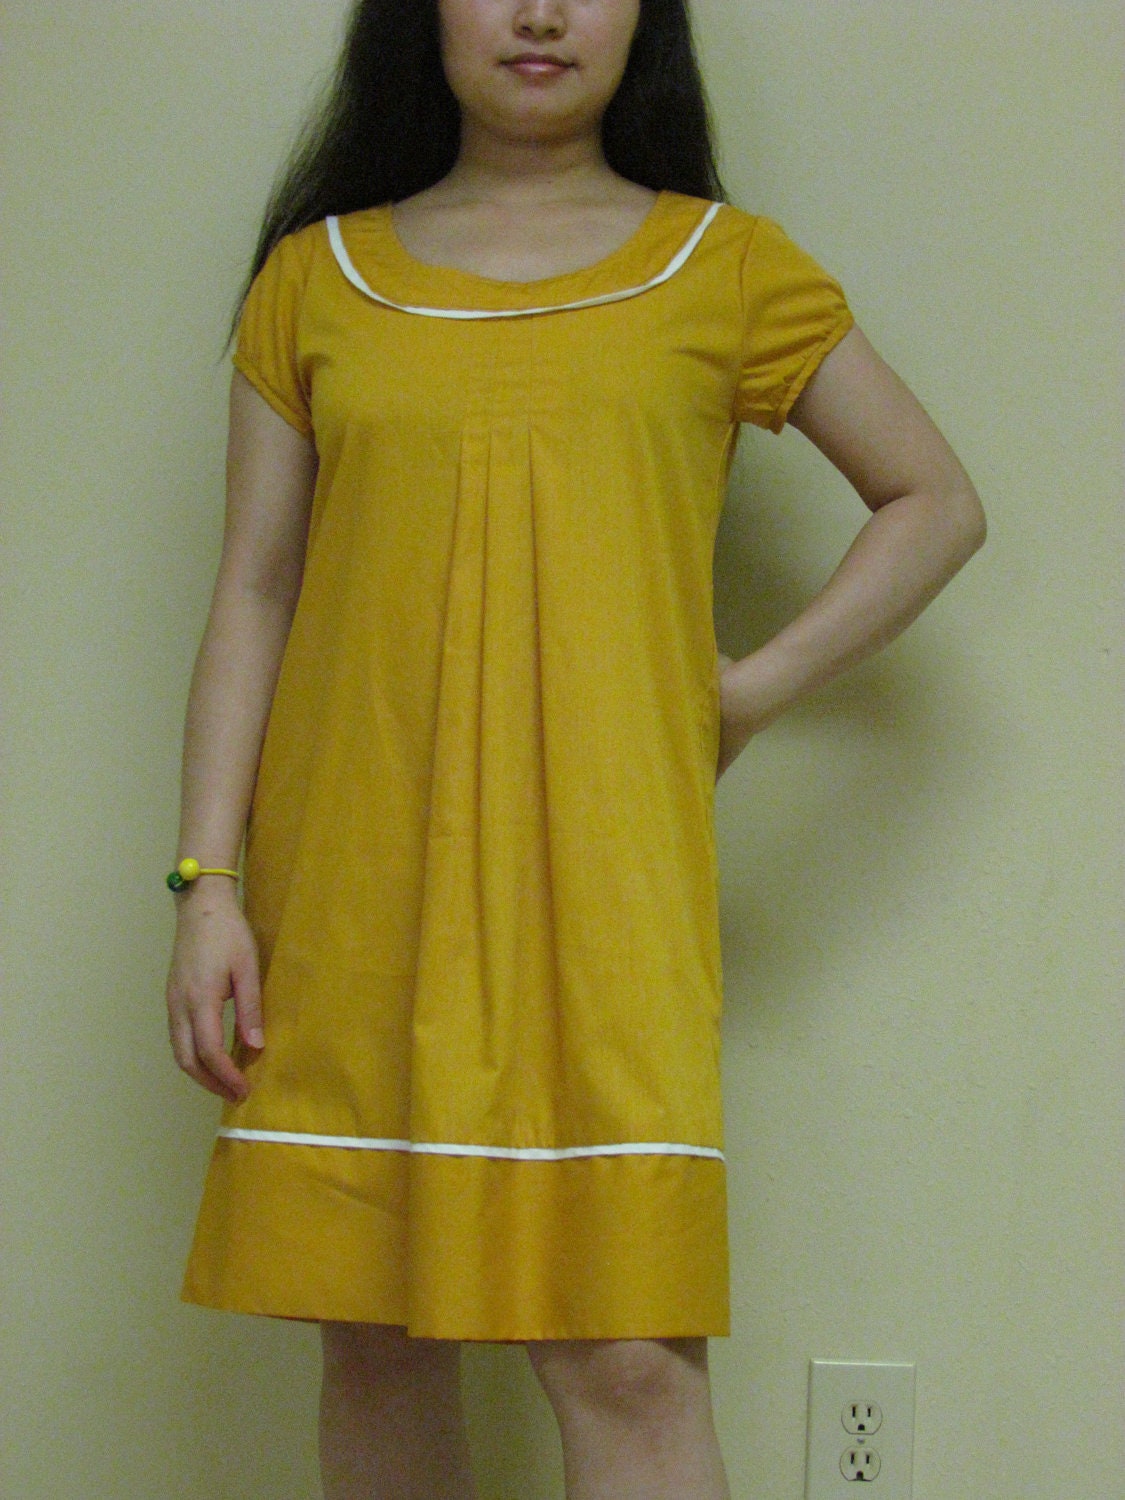 Casual Yellow Dress